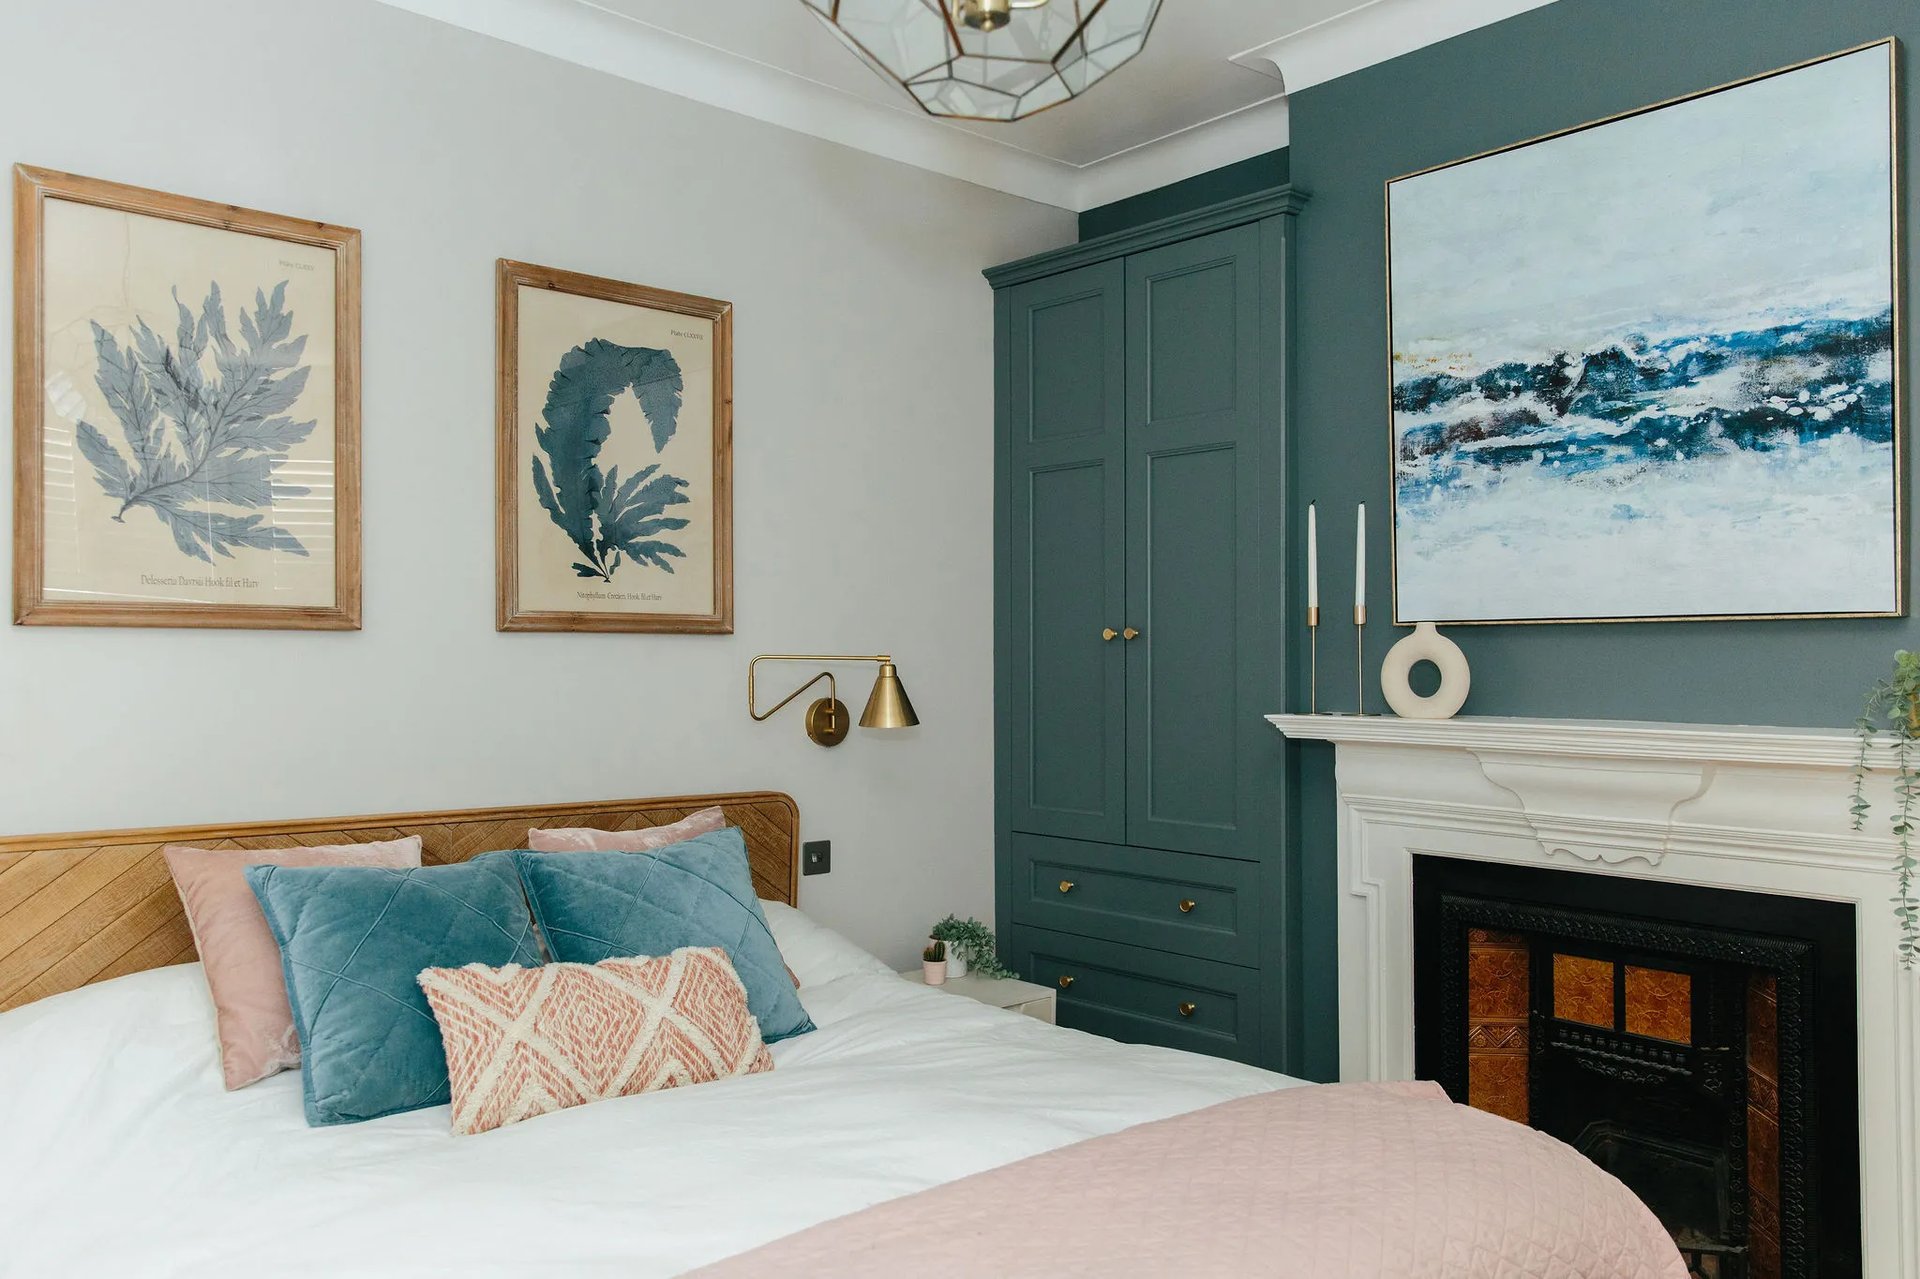 Pink and blue bedroom design